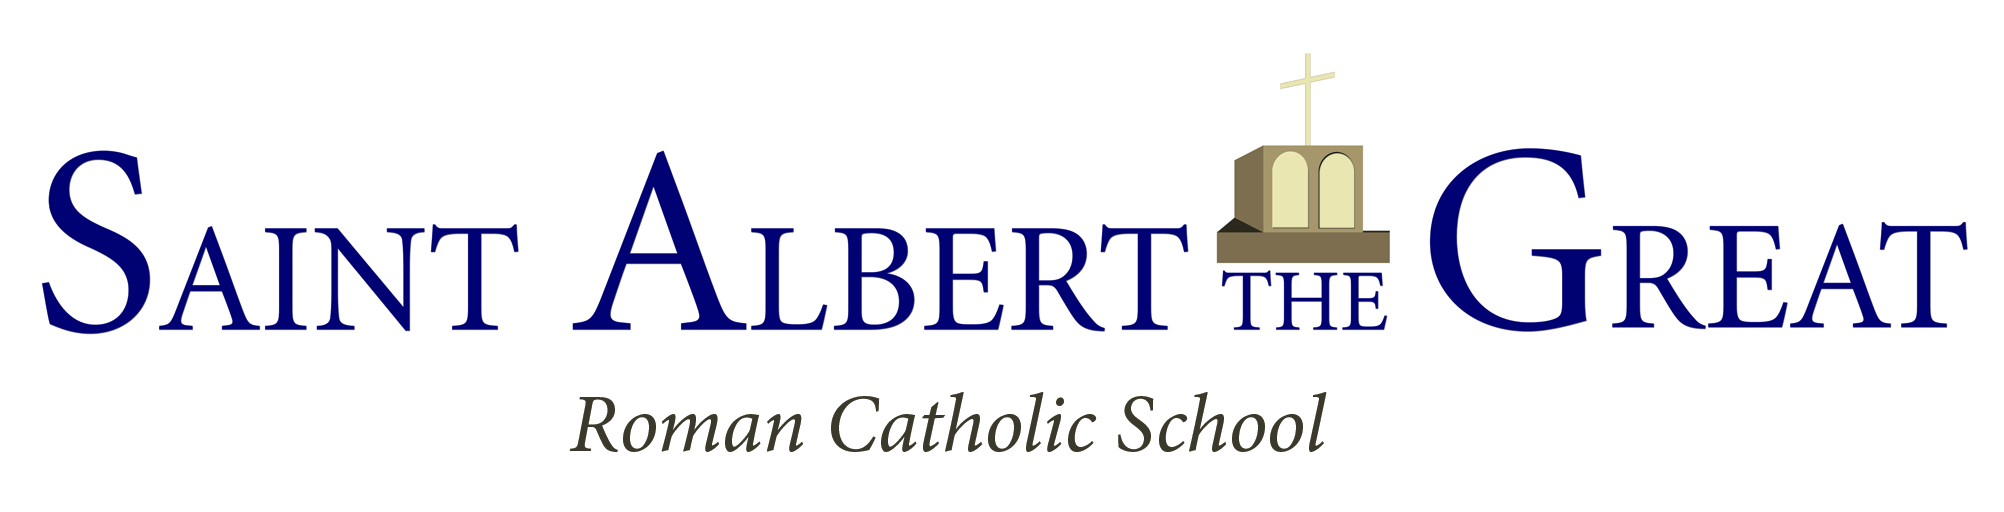 Saint Albert the Great logo